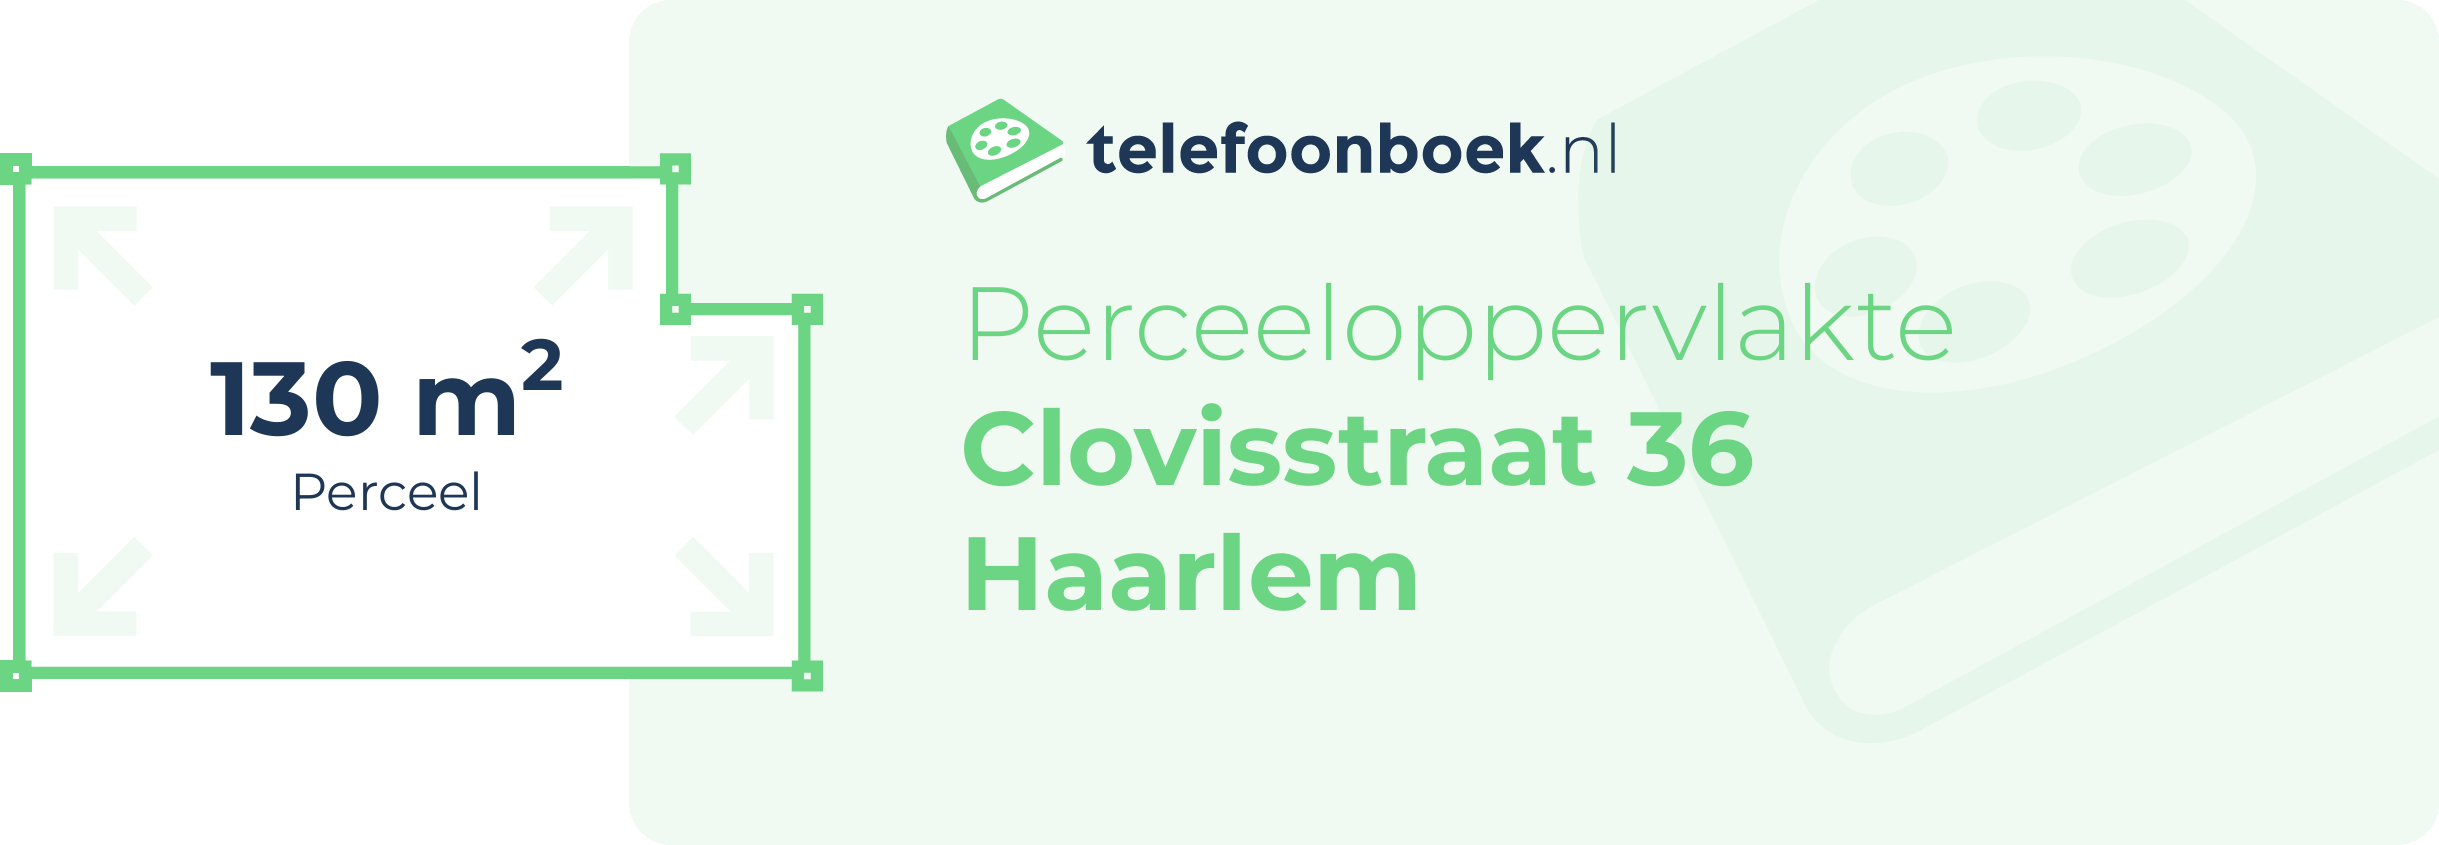 Perceeloppervlakte Clovisstraat 36 Haarlem